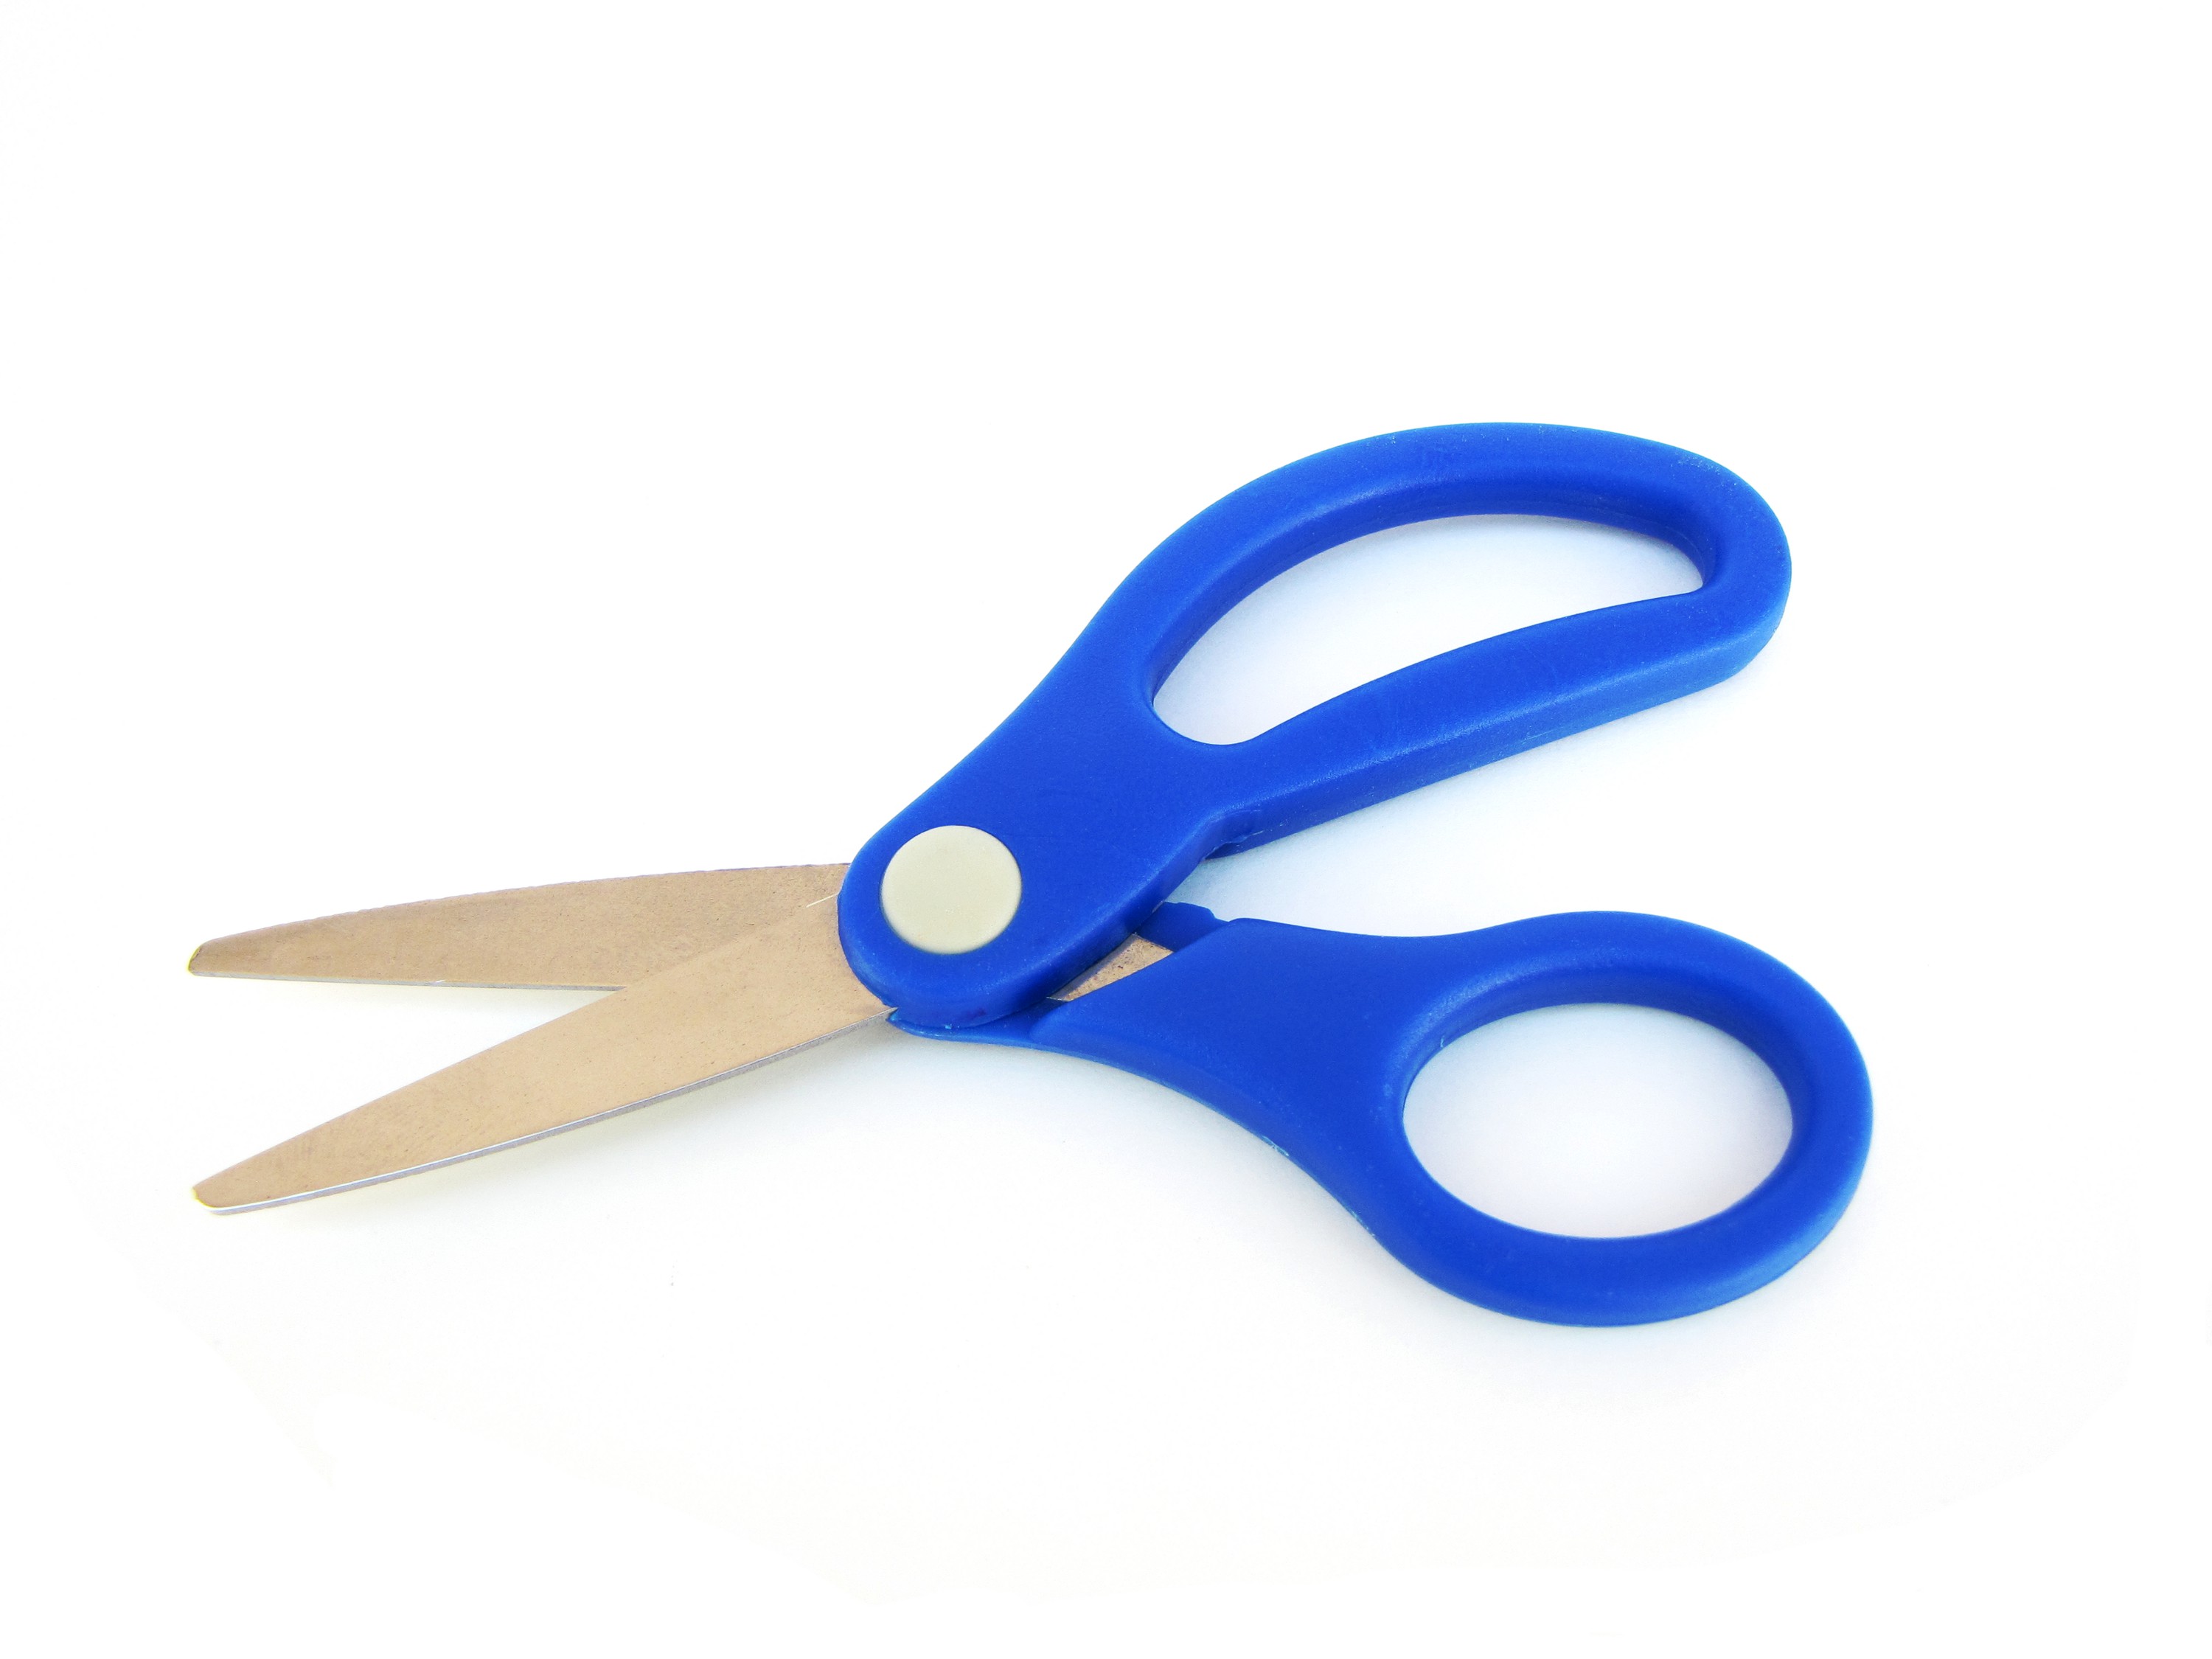 File:Small pair of blue scissors.jpg - Wikimedia Commons